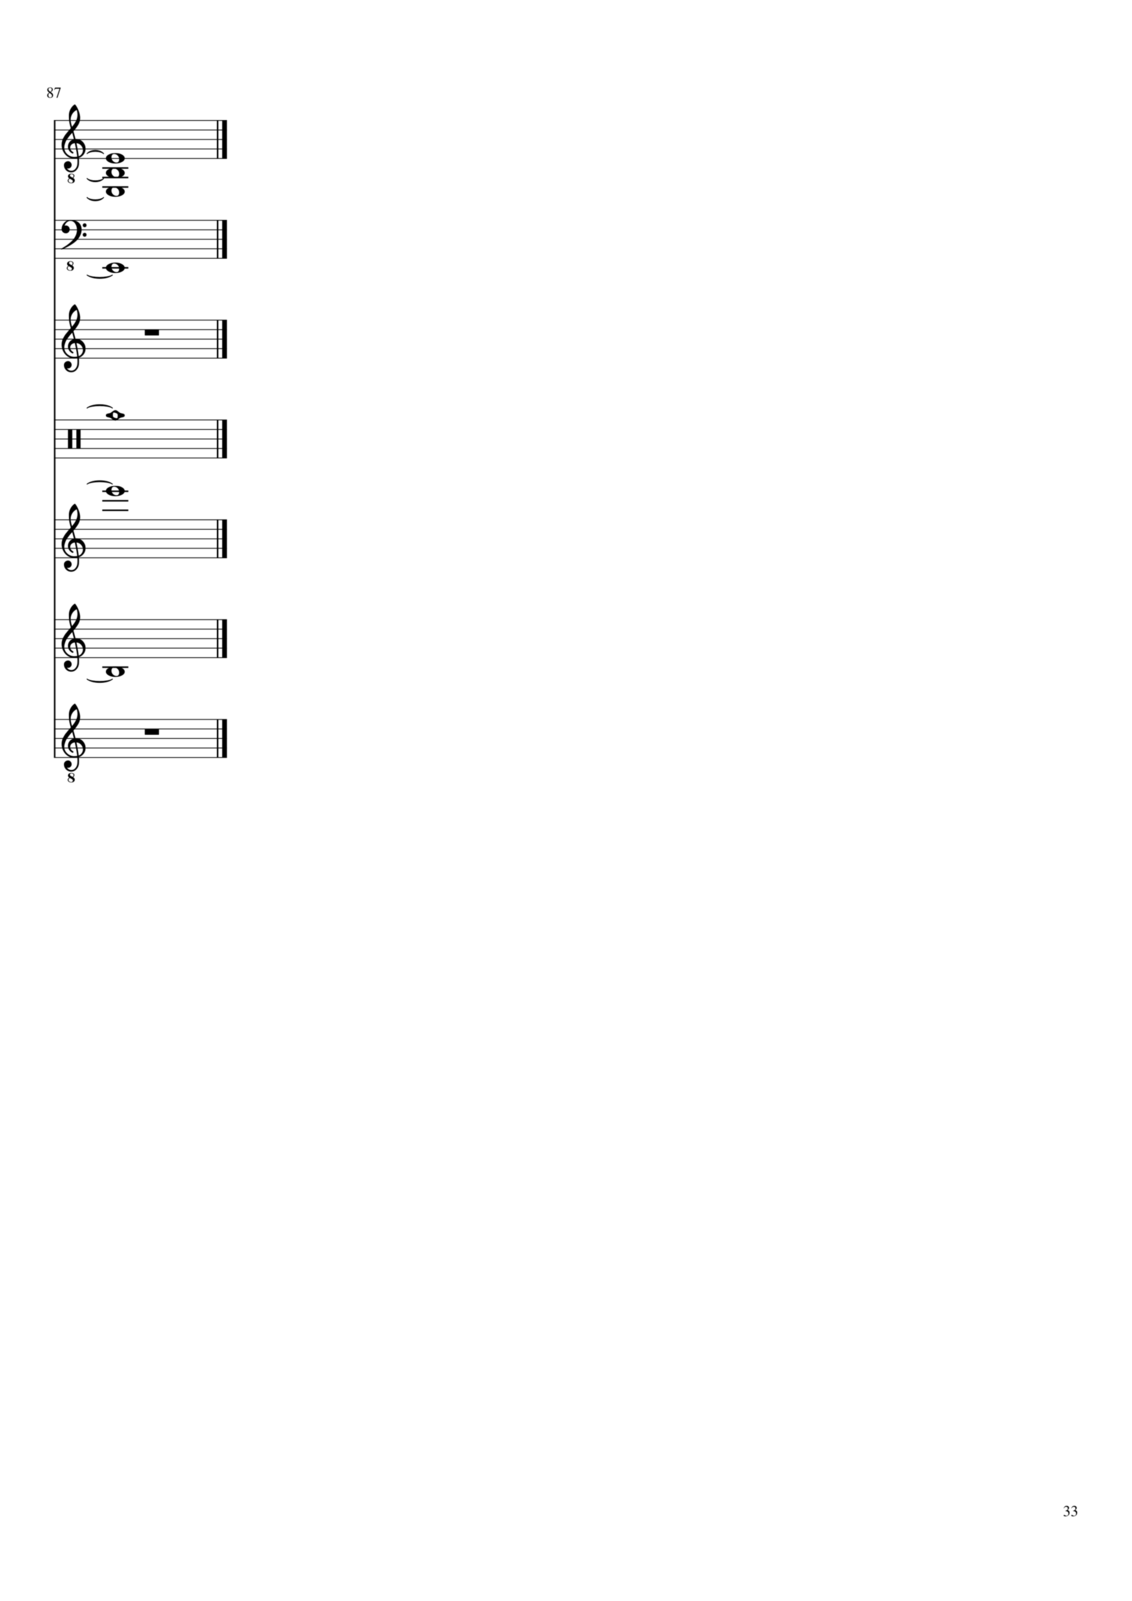 Vechno molodoy slide, Image 33